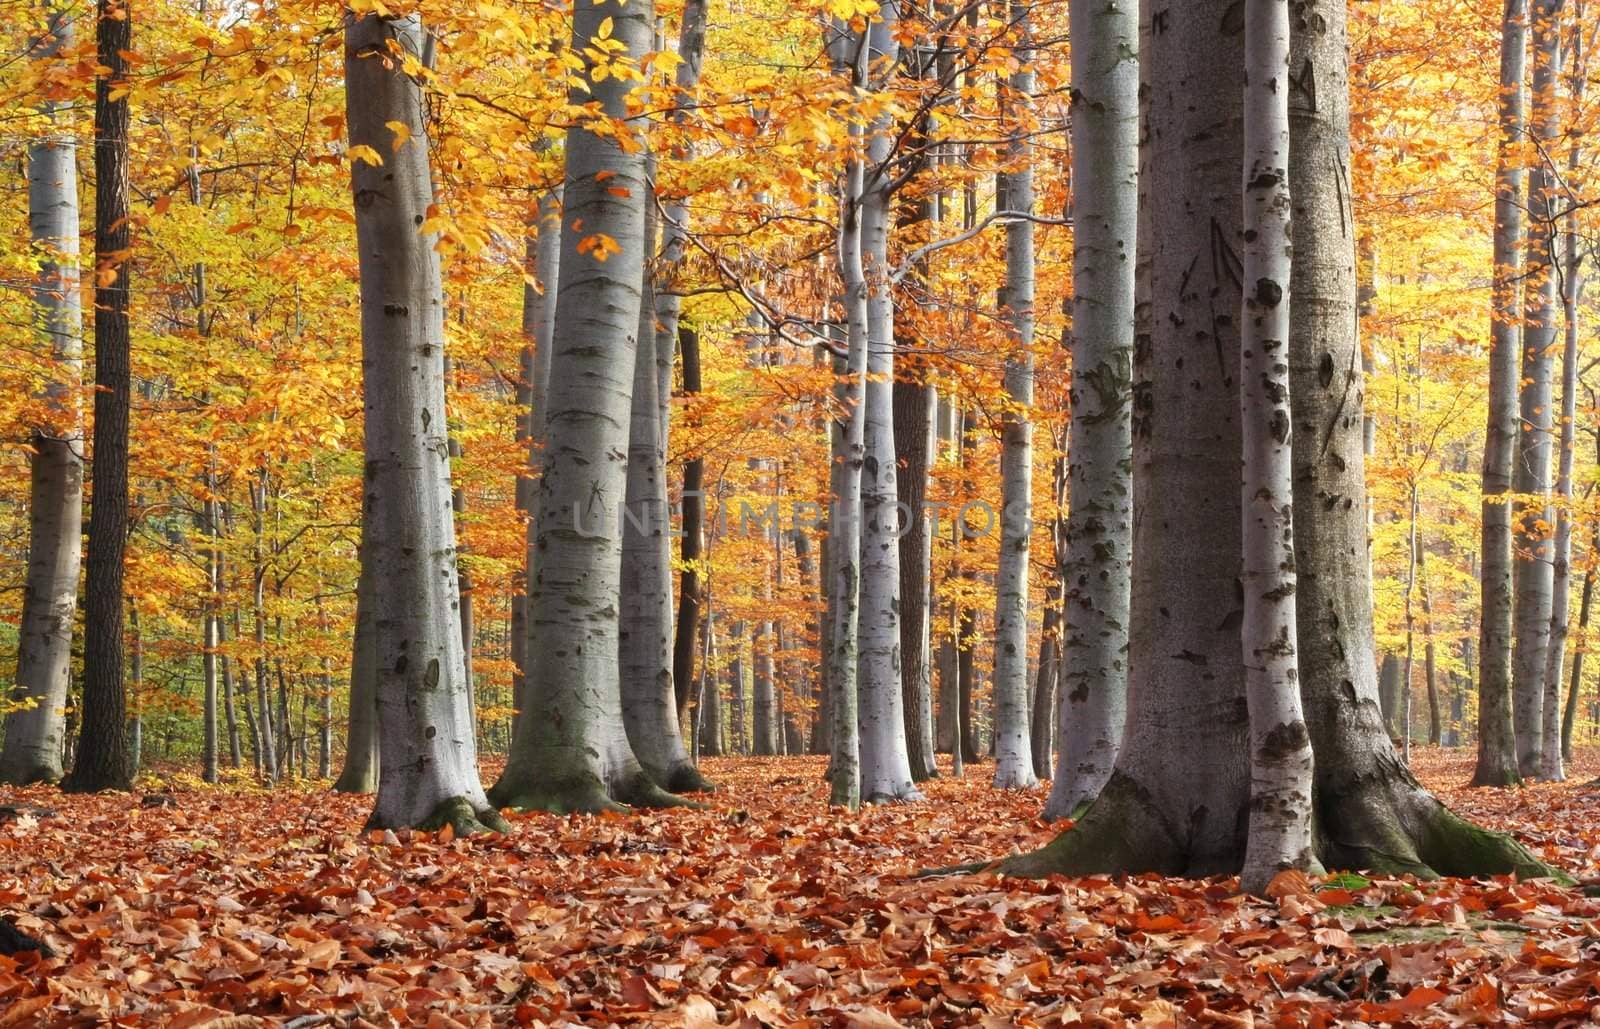 Beech forest in autumn - nice autumn wallpaper